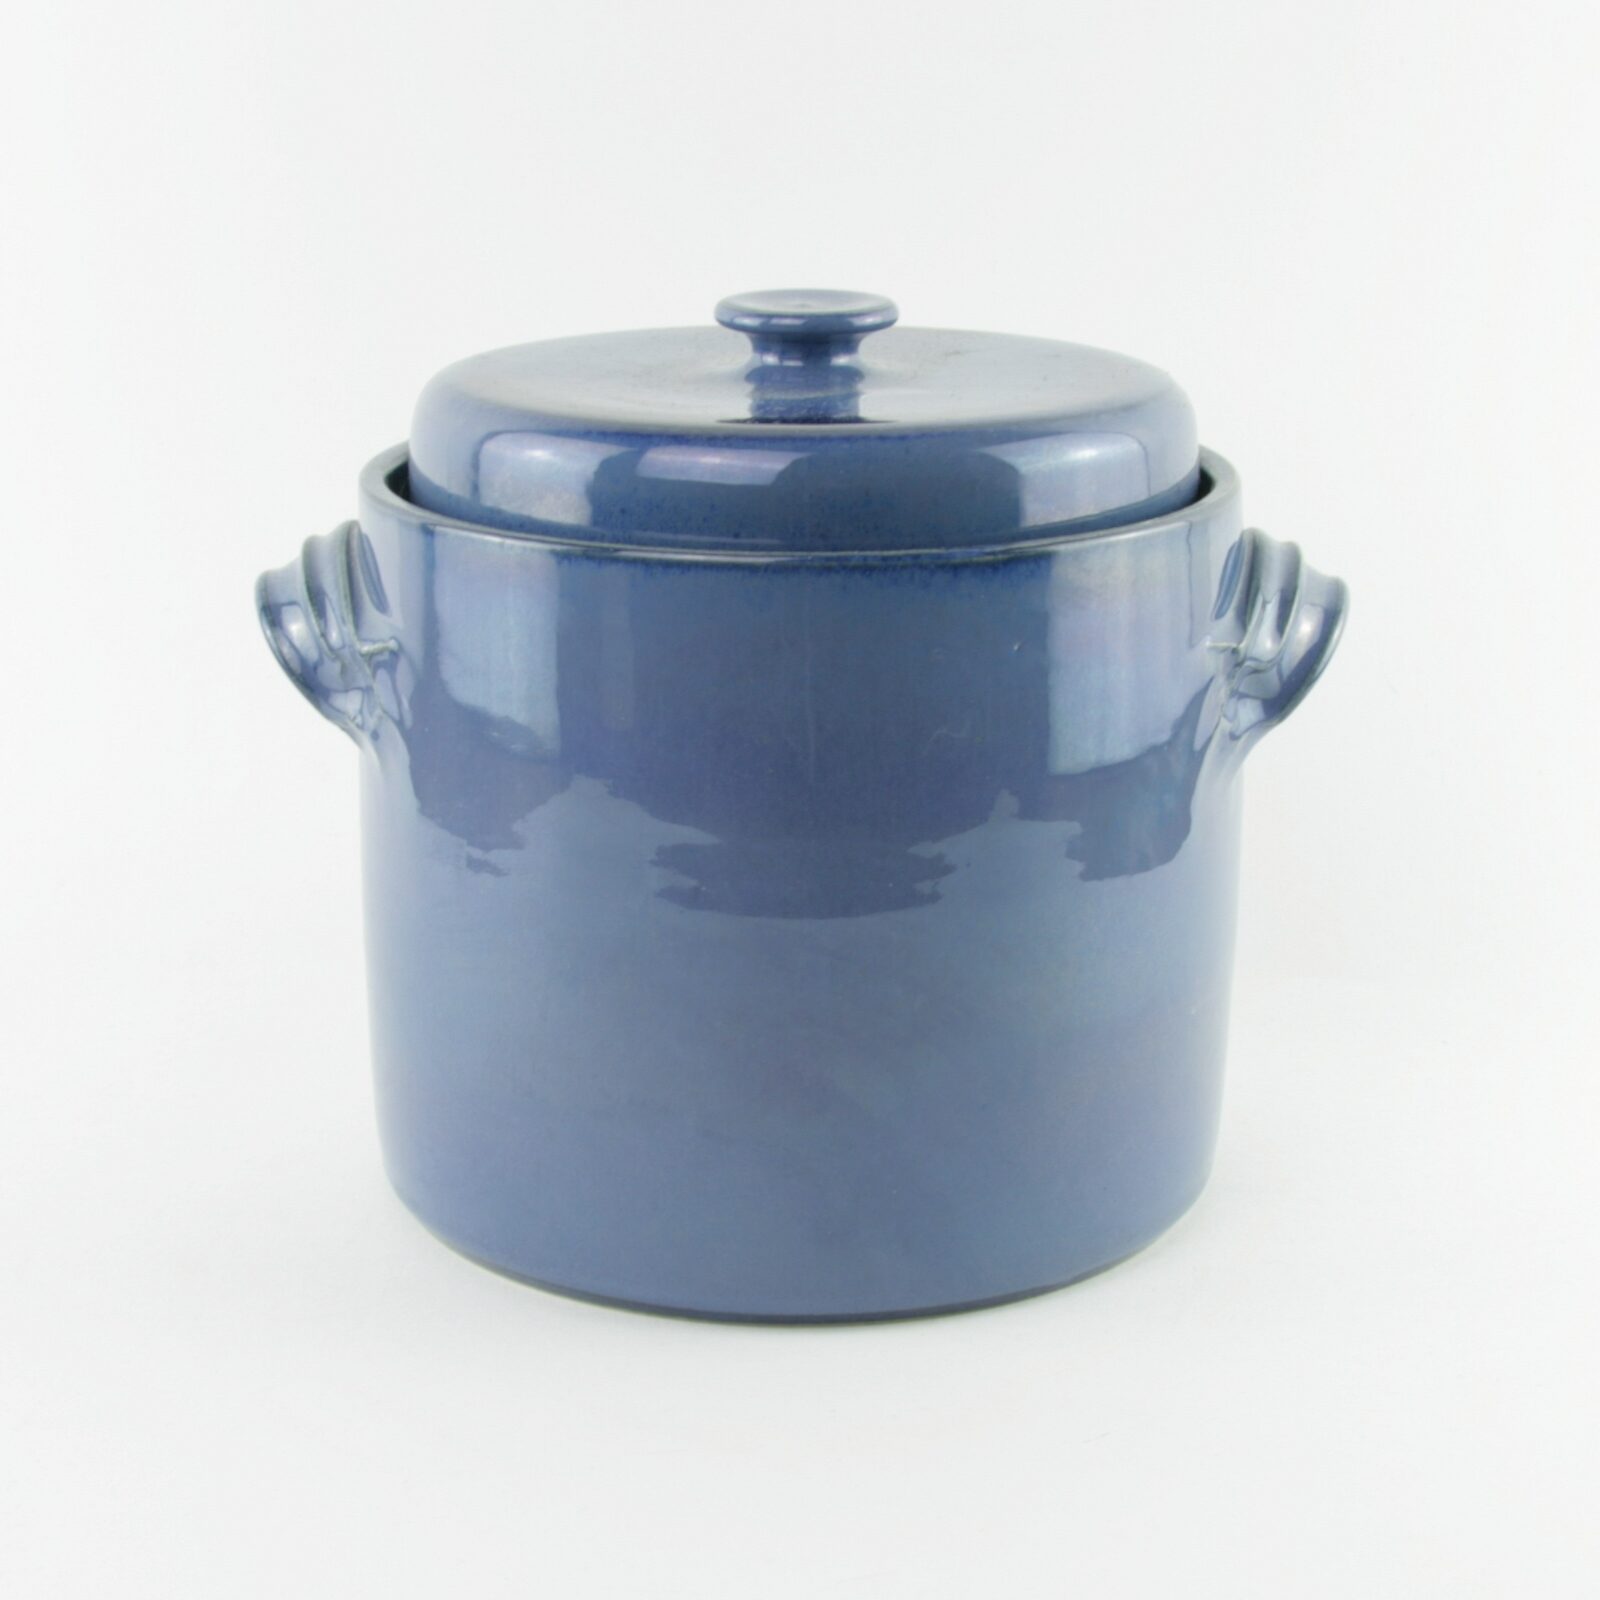 2 litre handmade ceramic sauerkraut crock in blue with weight stones